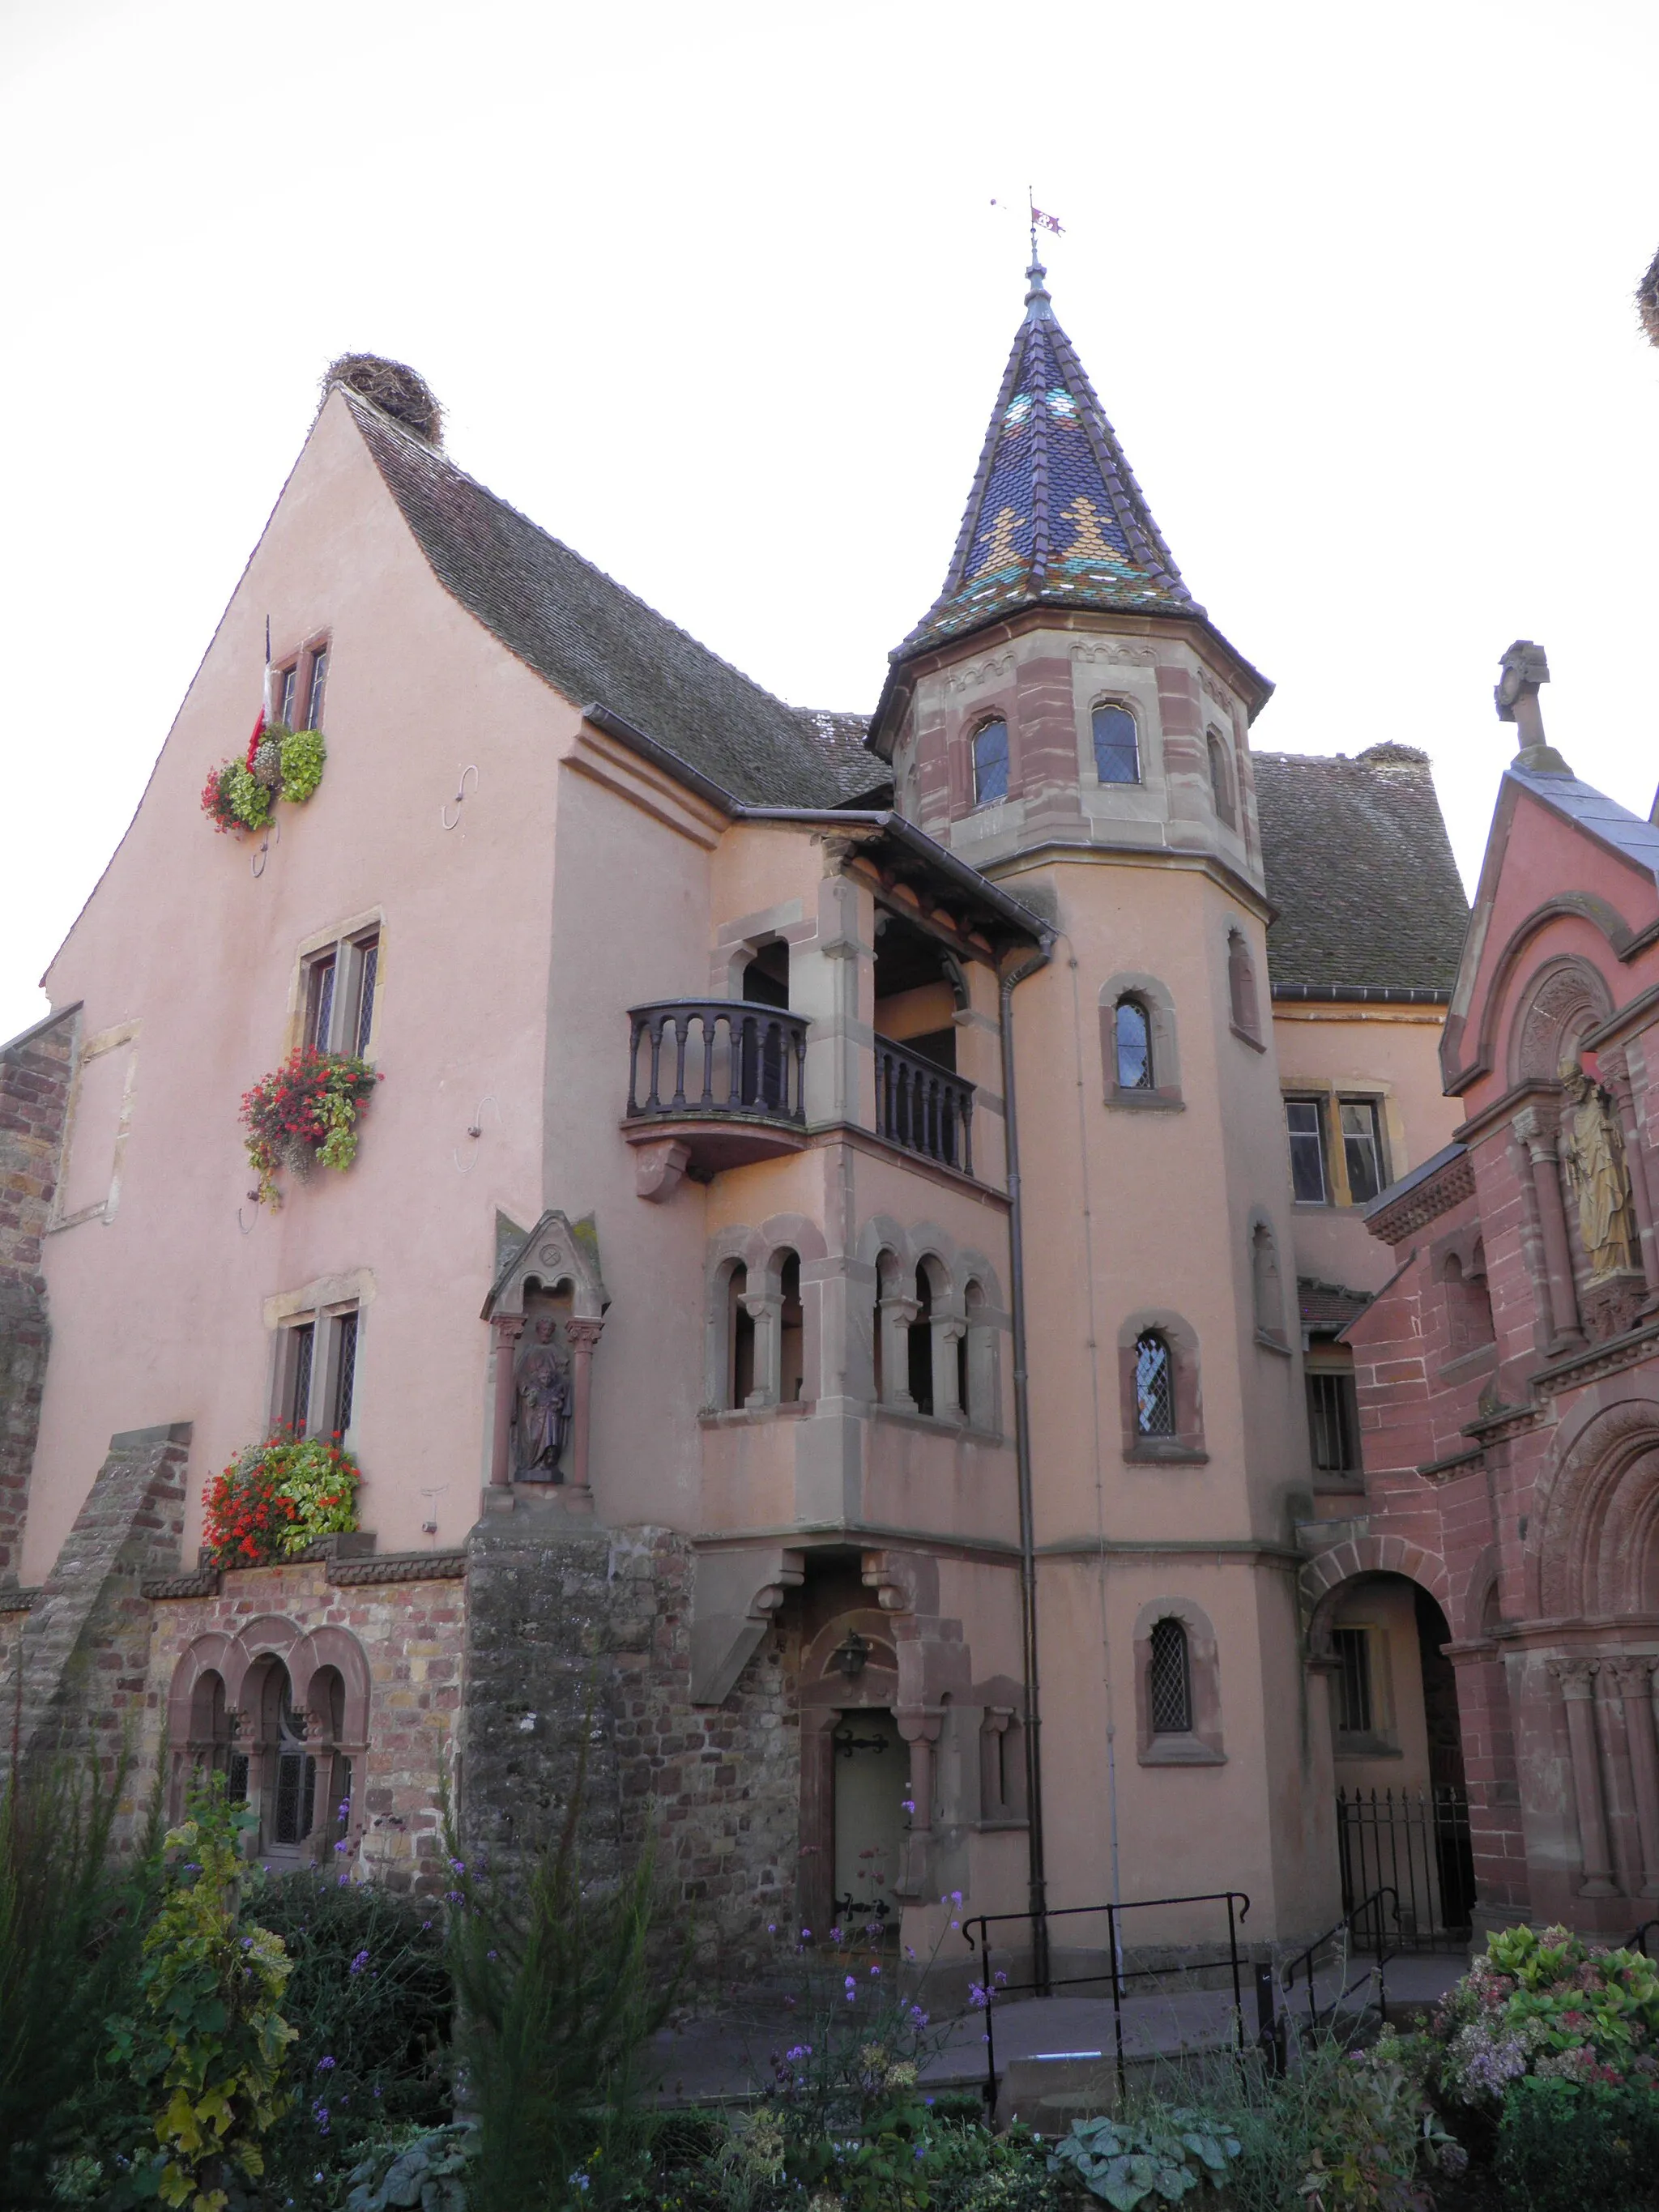 Image of Eguisheim